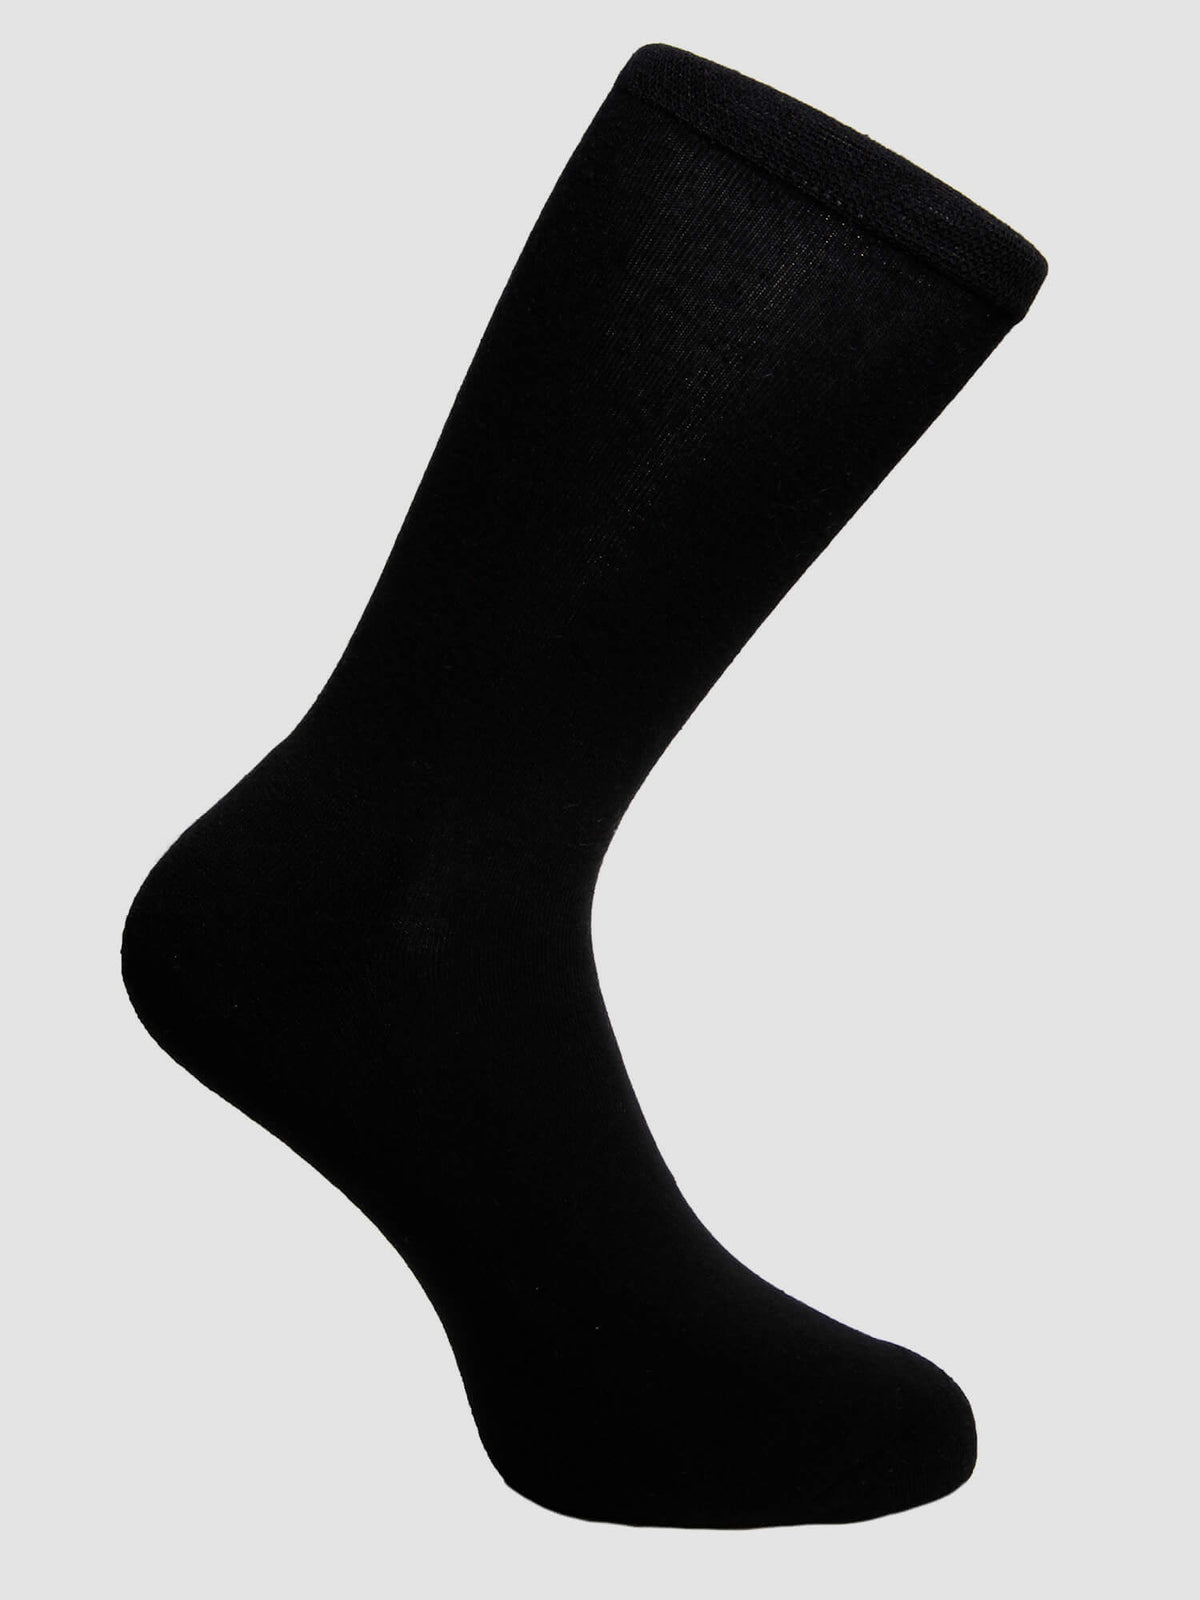 Simon de Winter - 2 Pack Ladies Cushion Foot Crew Socks